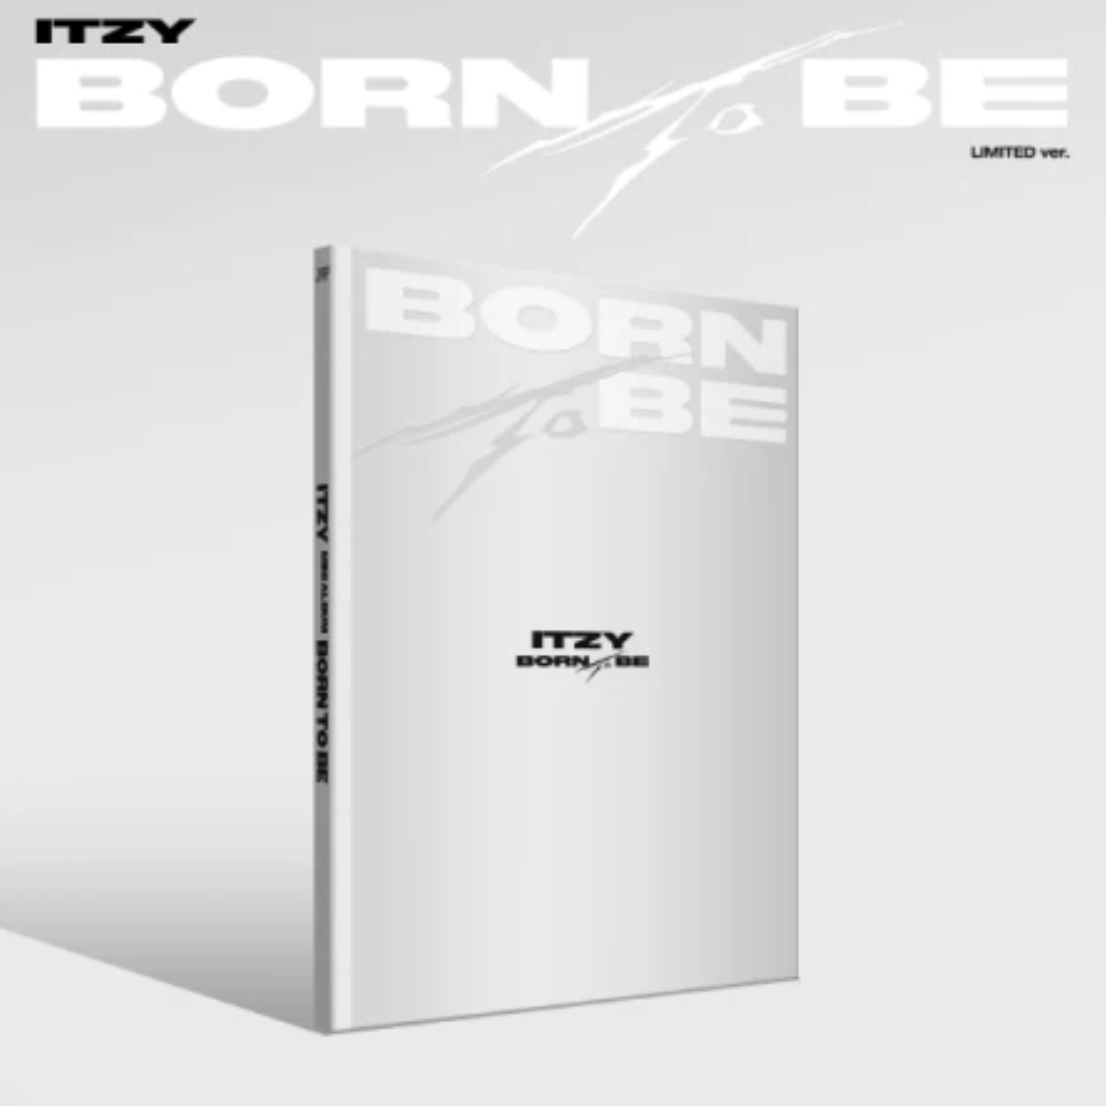 [PRE-ORDER] ITZY - BORN TO BE 2ND MINI ALBUM LIMITED Version